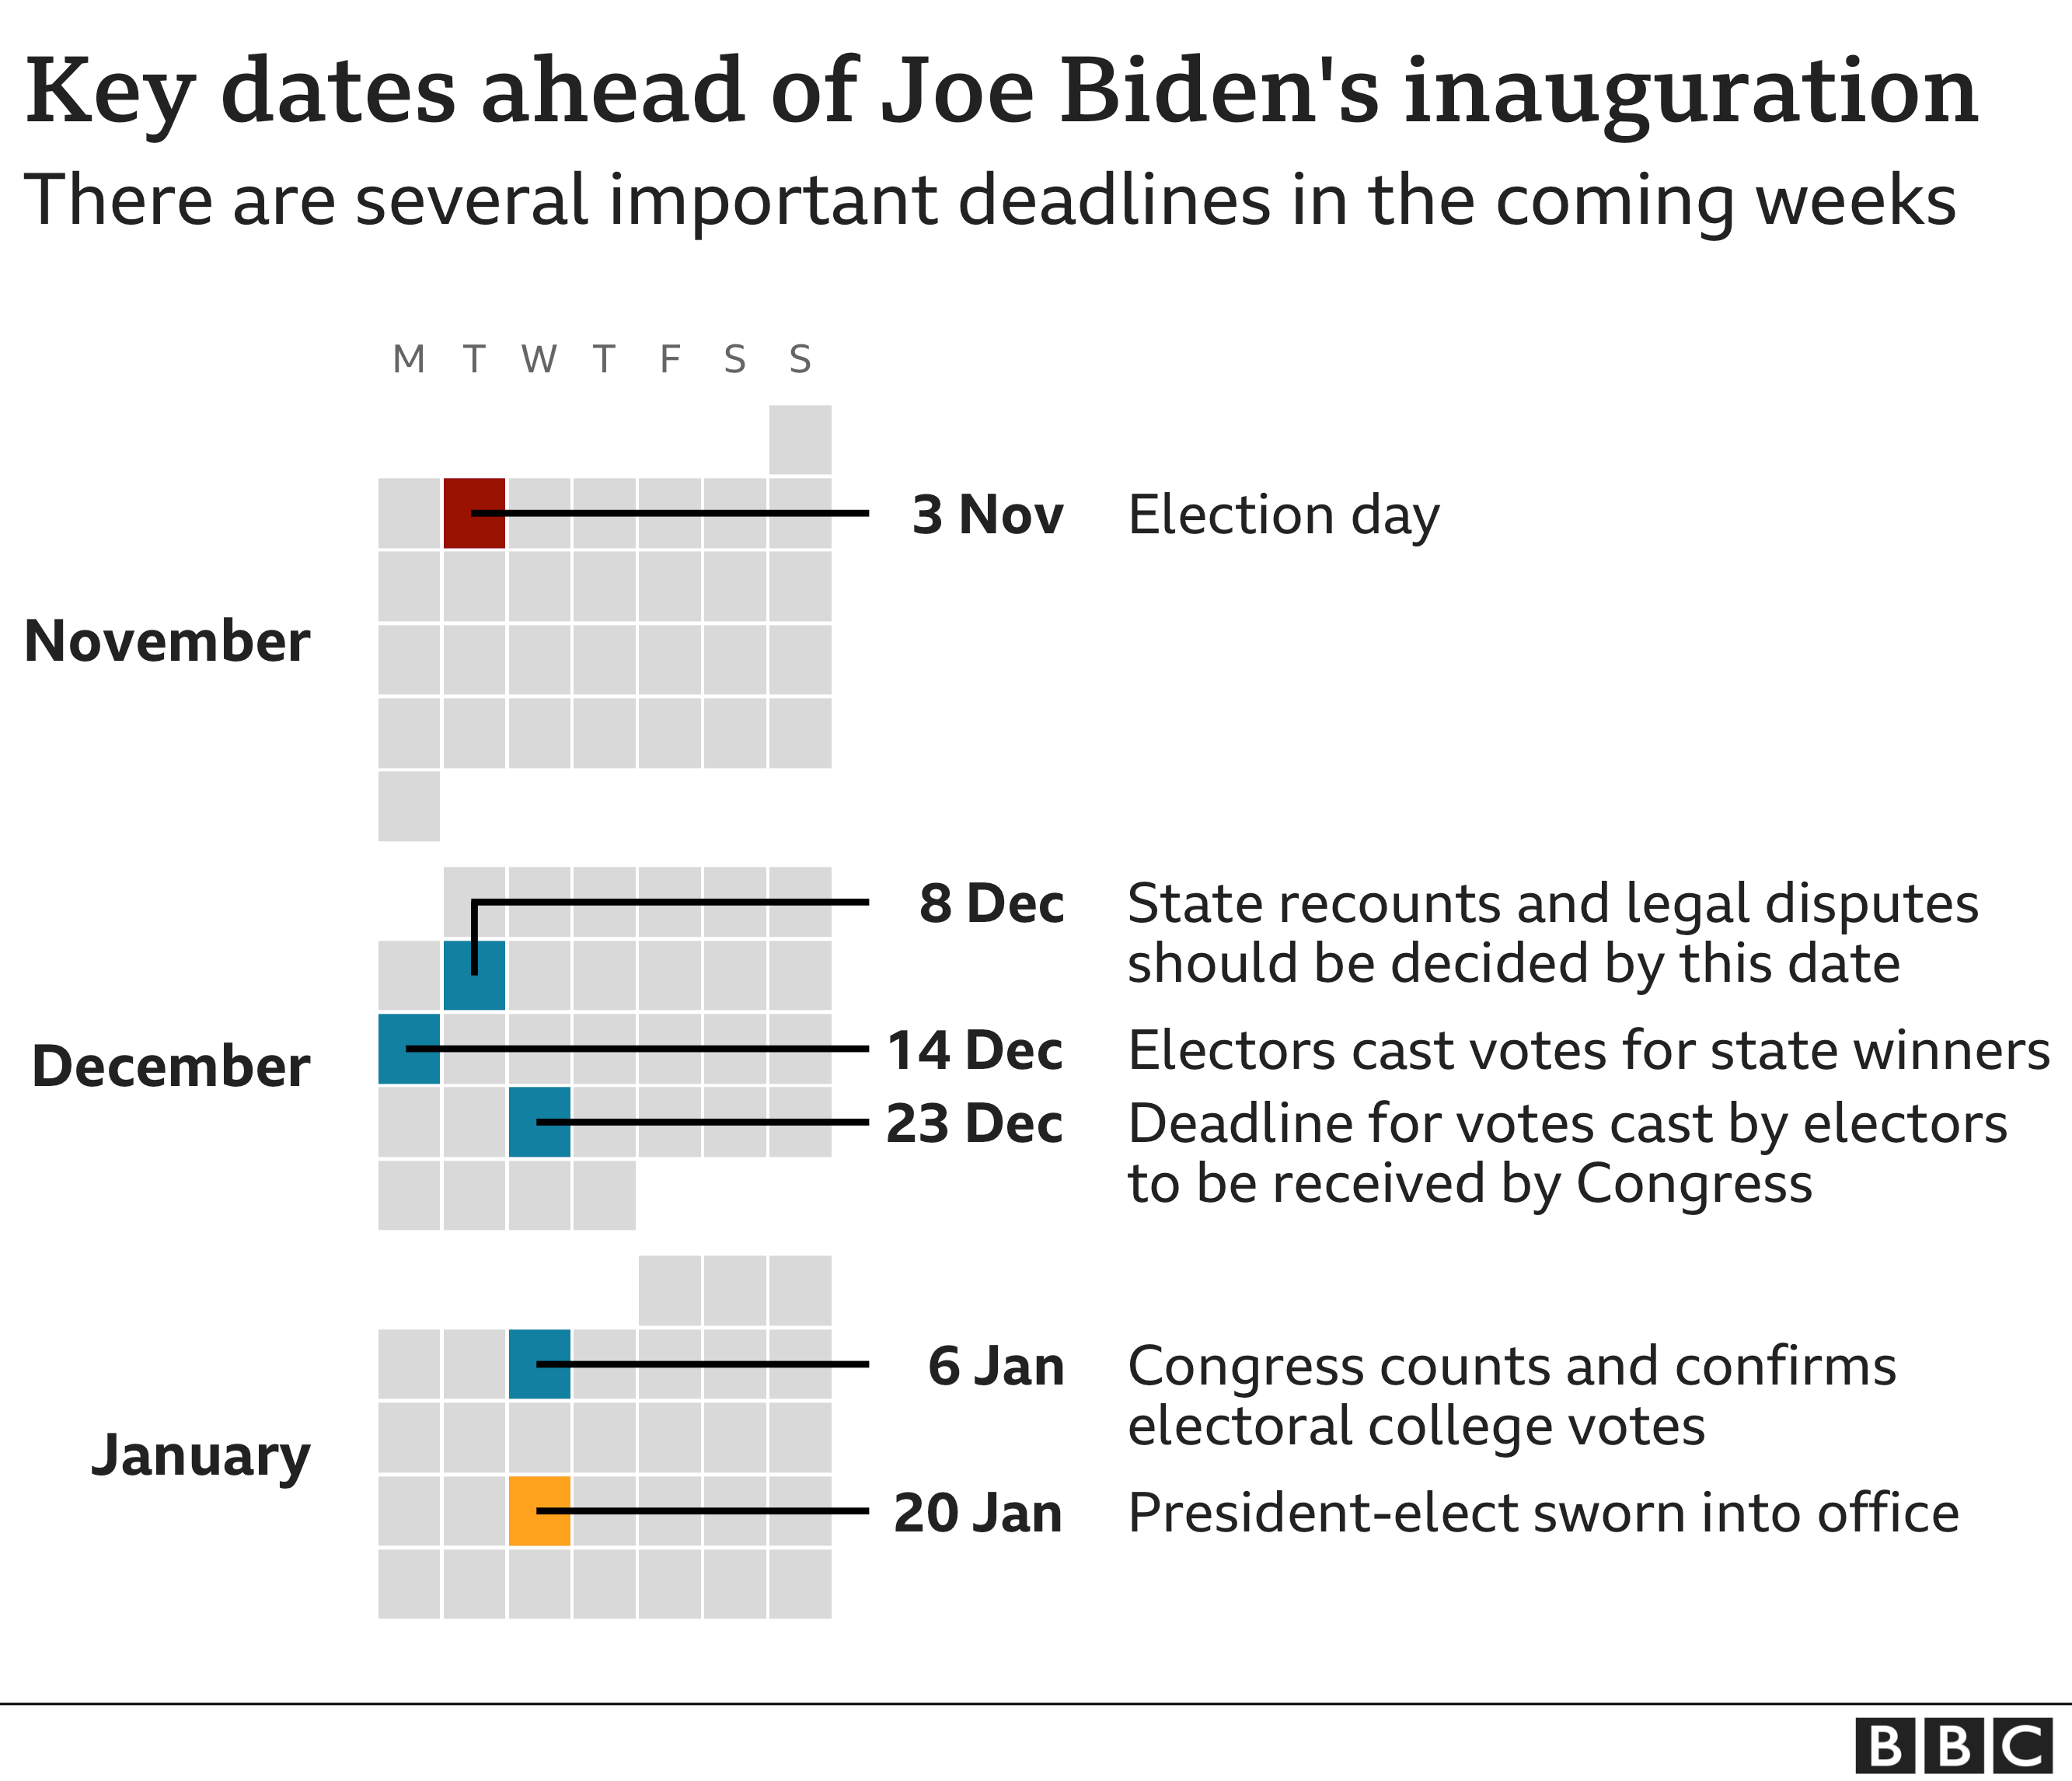 Key dates ahead of Joe Biden's inauguration